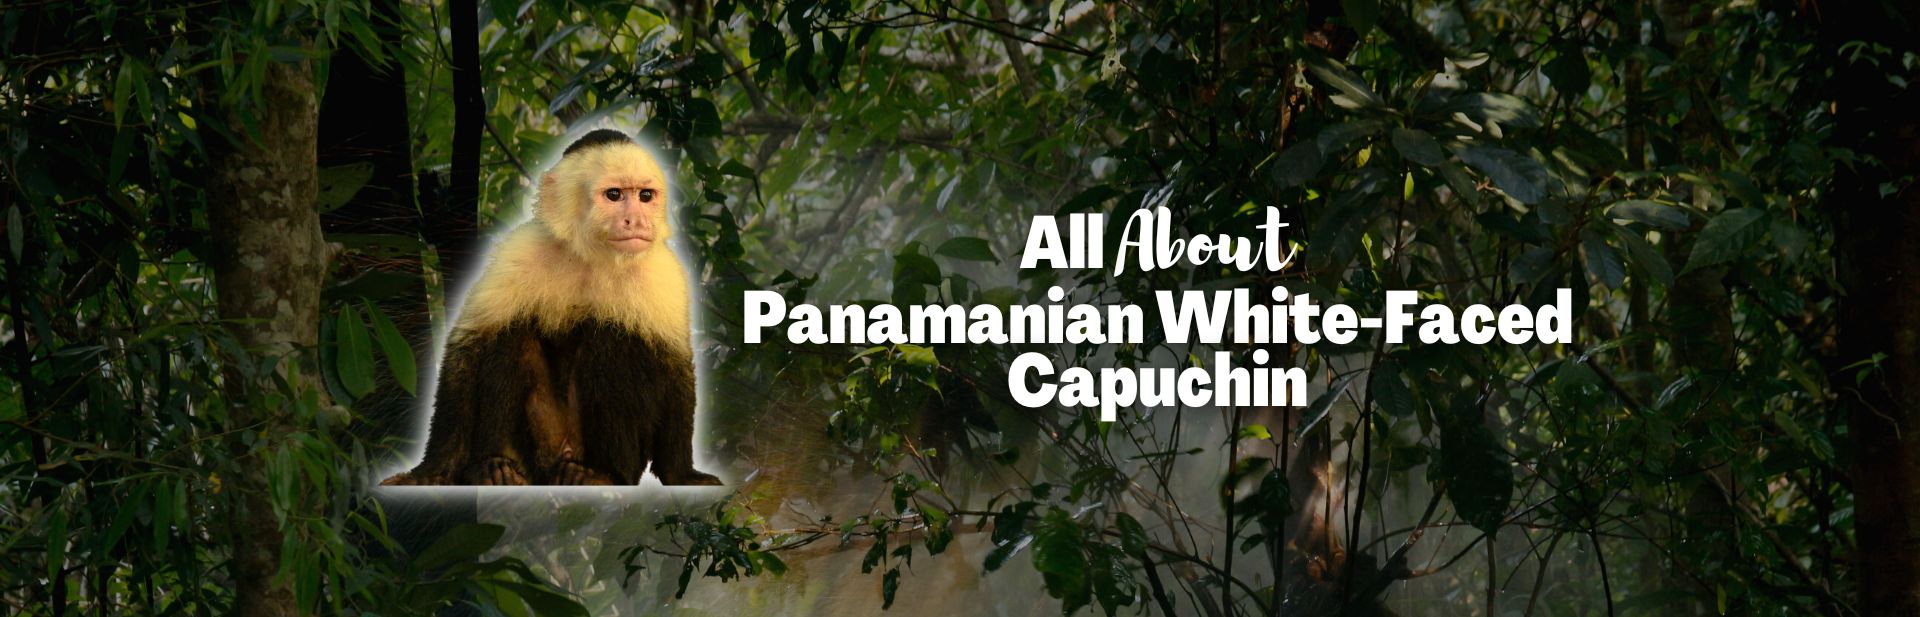 Panamanian White-Faced Capuchin: The Most Intelligent New World Monkey